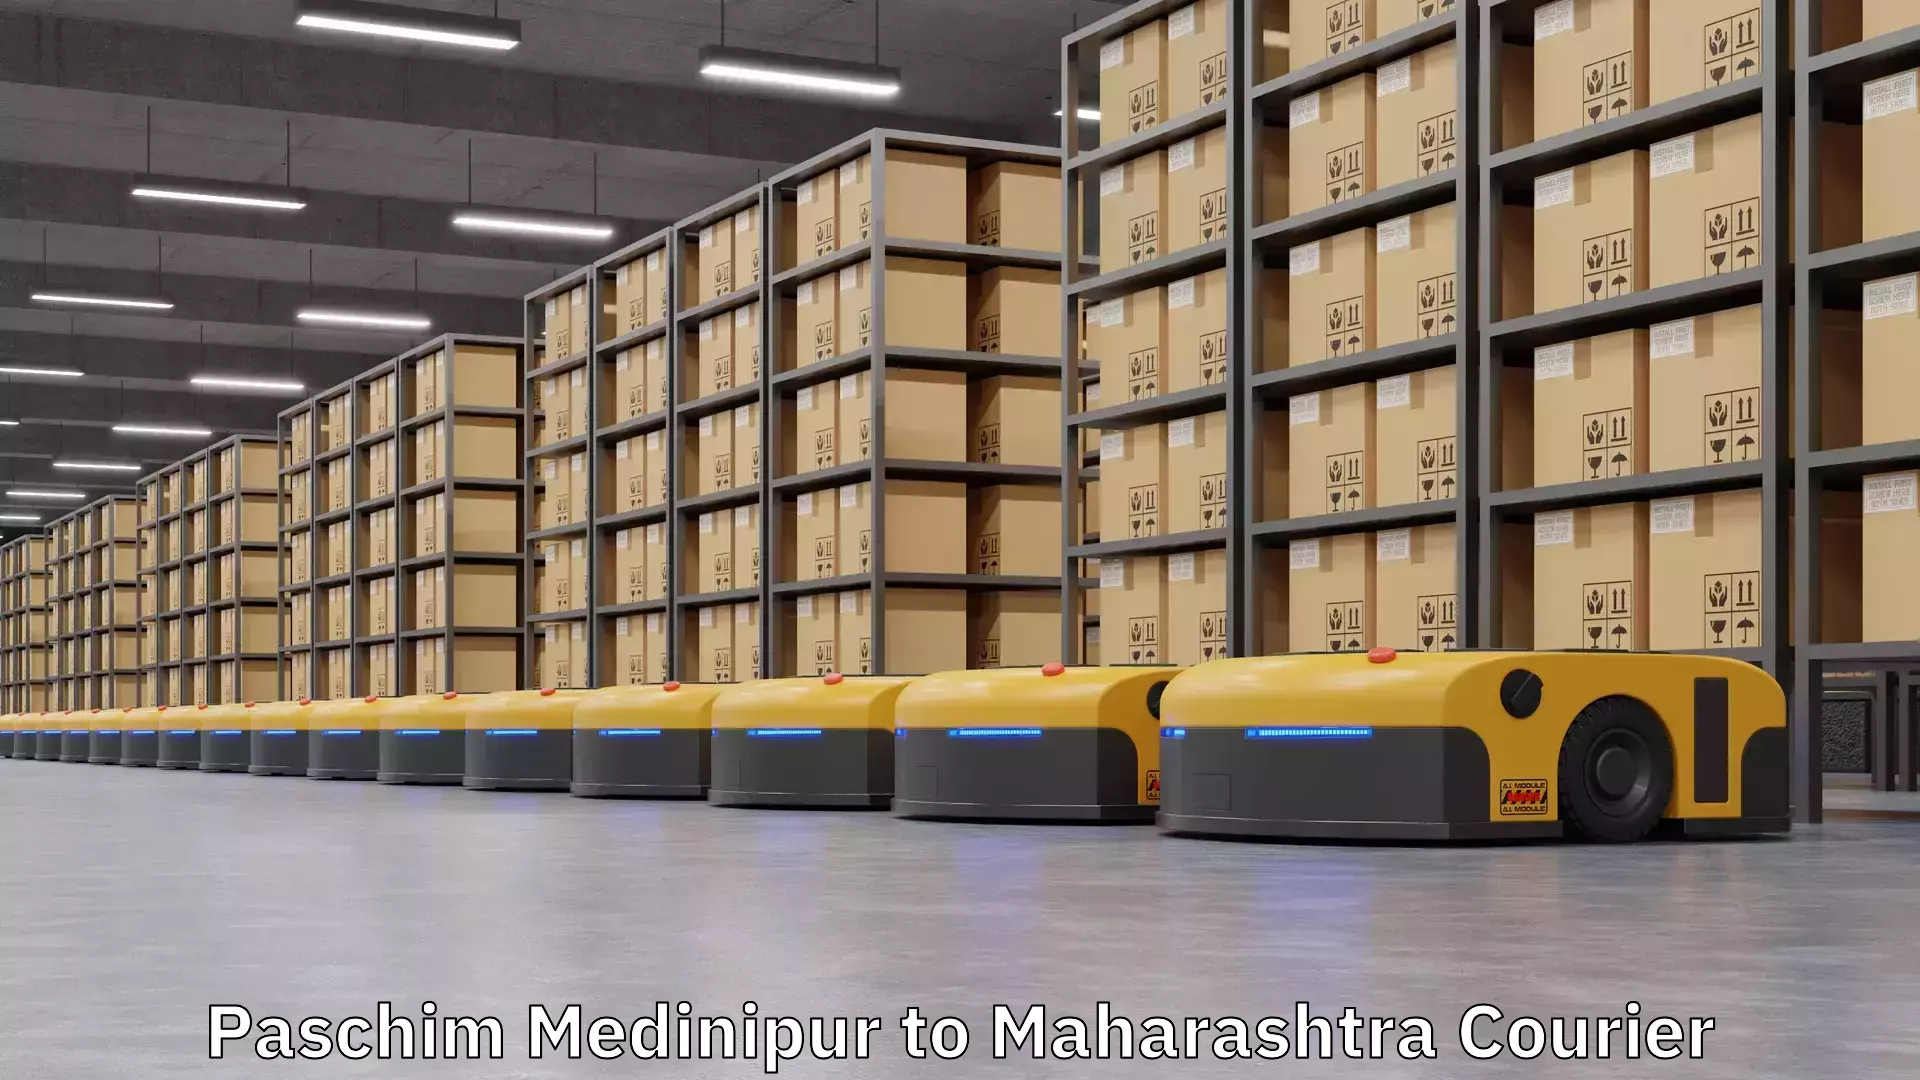 Courier service innovation Paschim Medinipur to Maharashtra